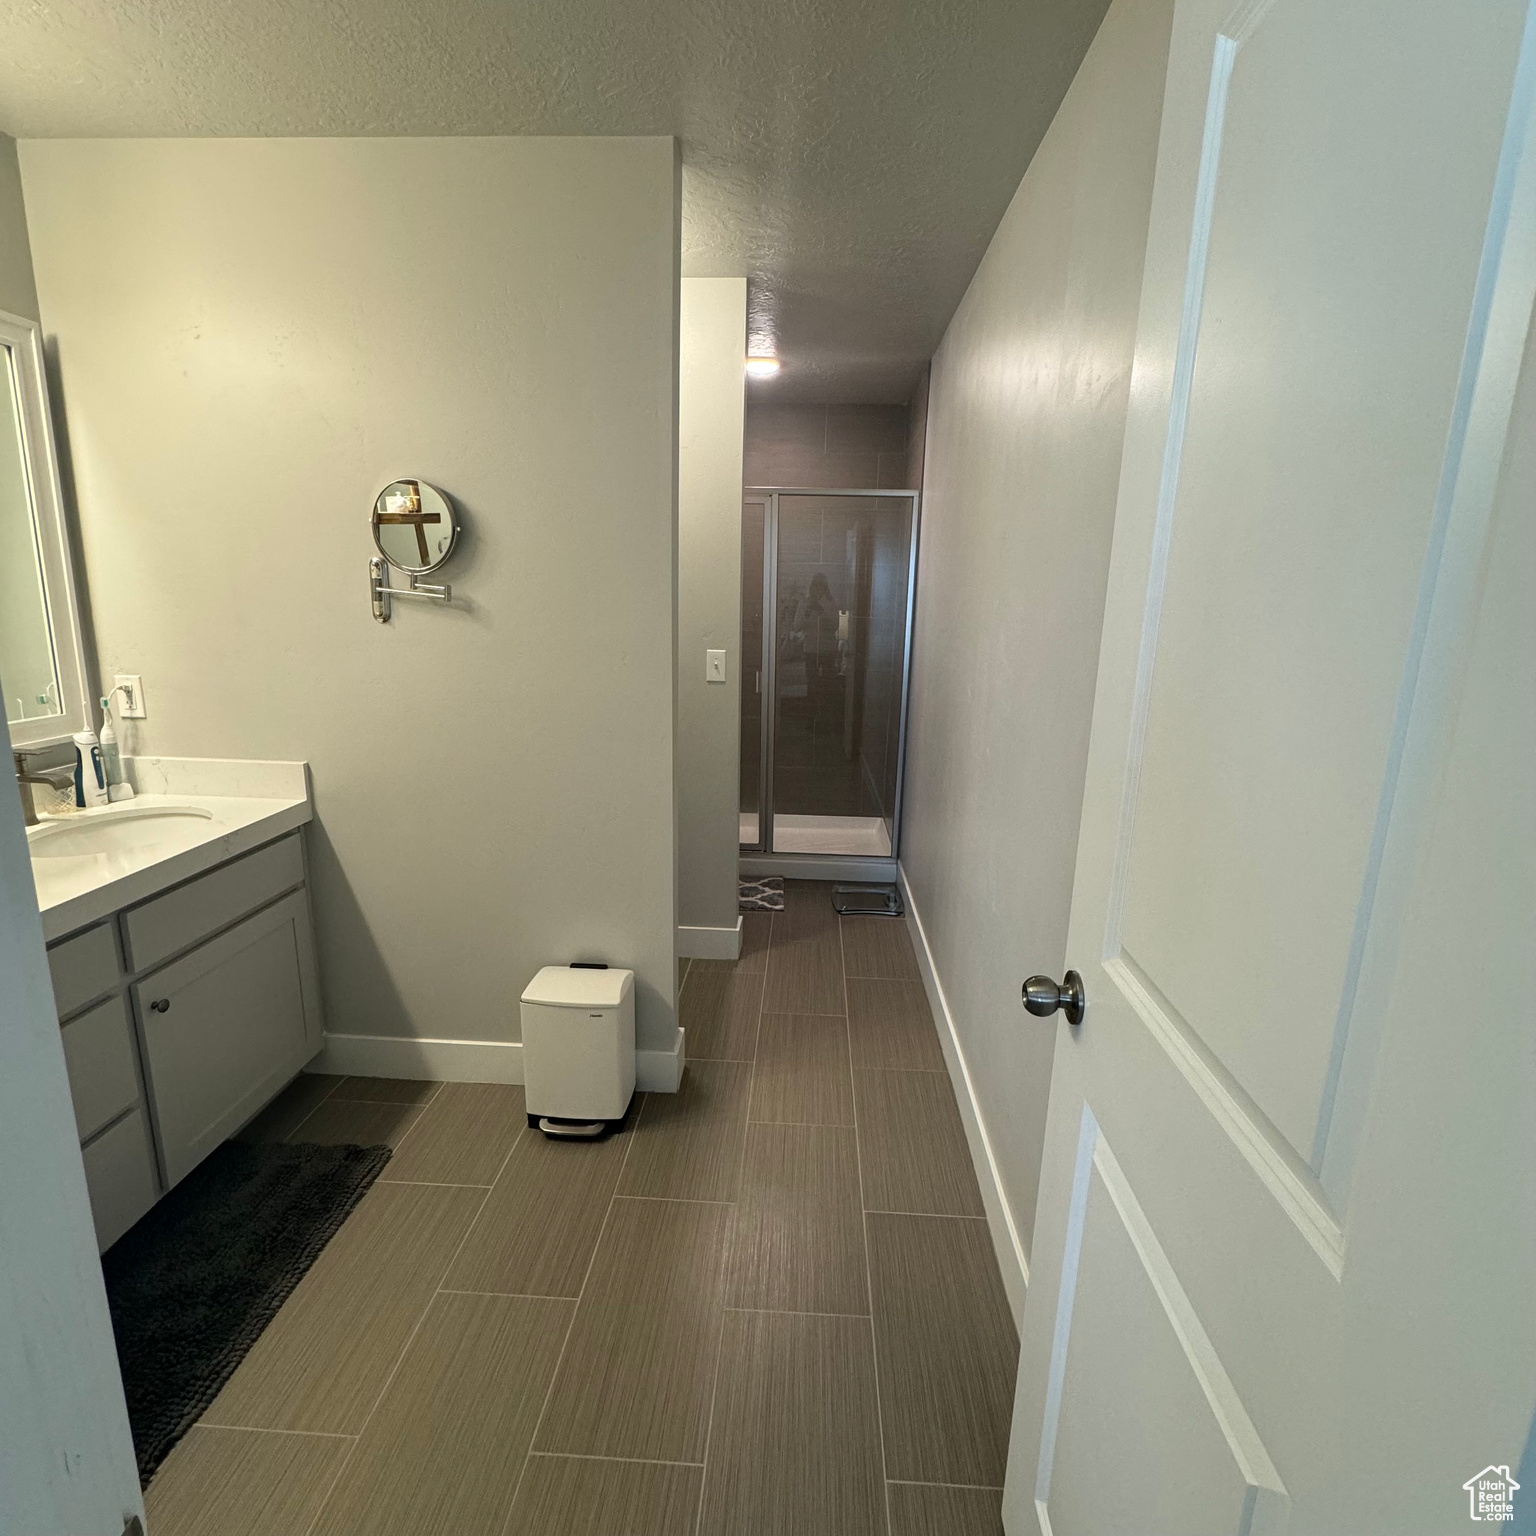 Bathroom with walk in shower, tile flooring, and vanity